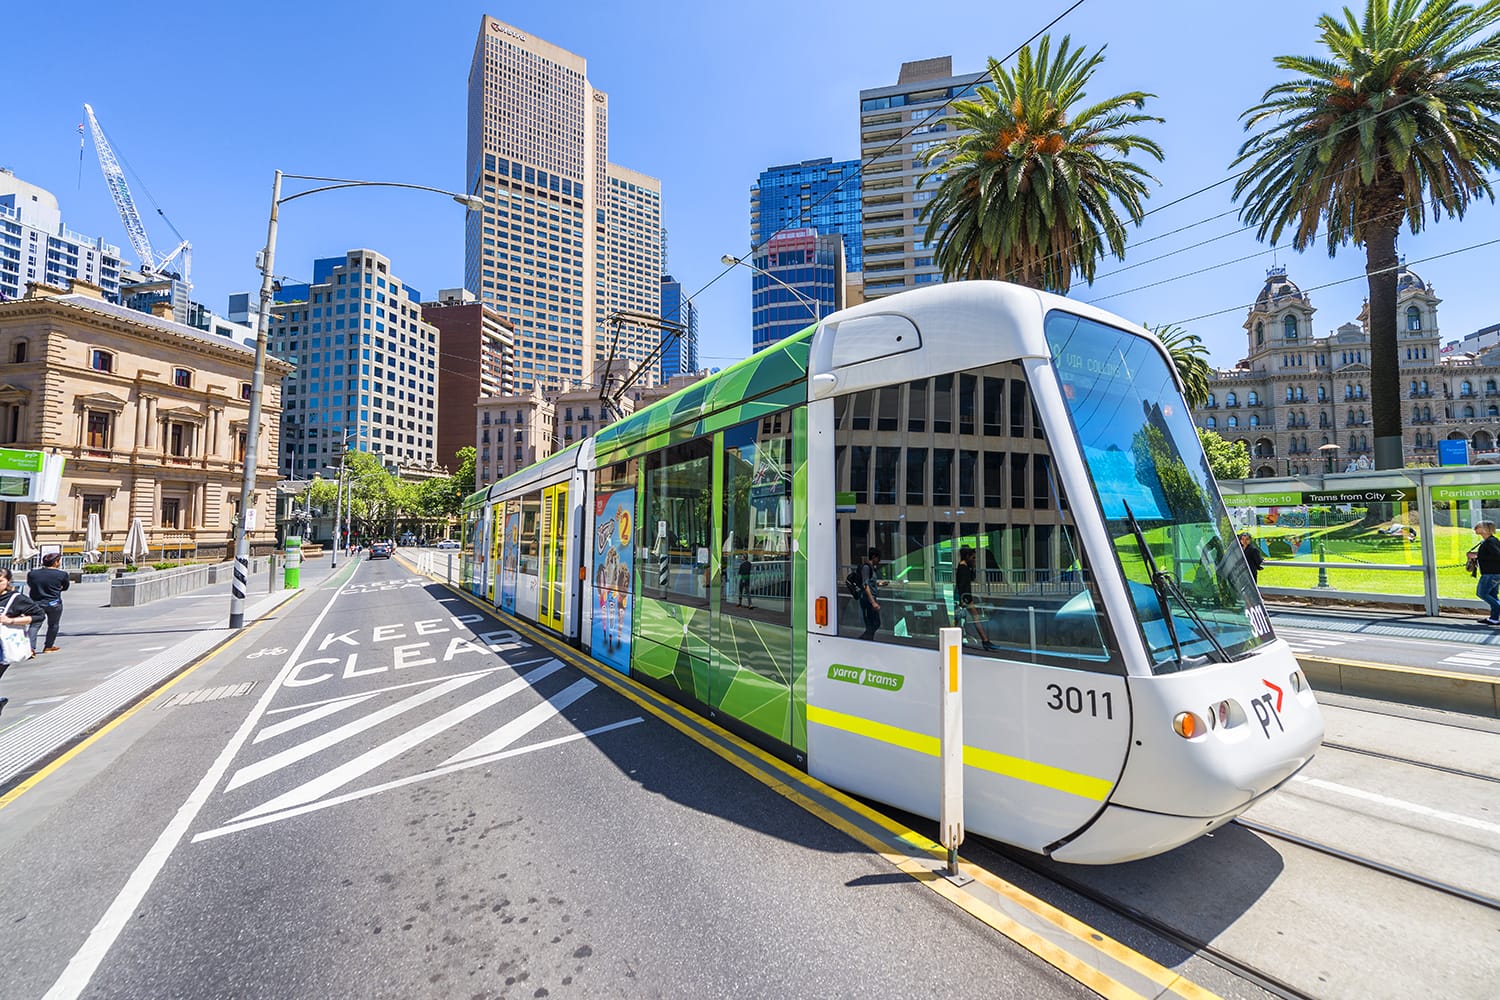 Tram in Melbourne, Australia